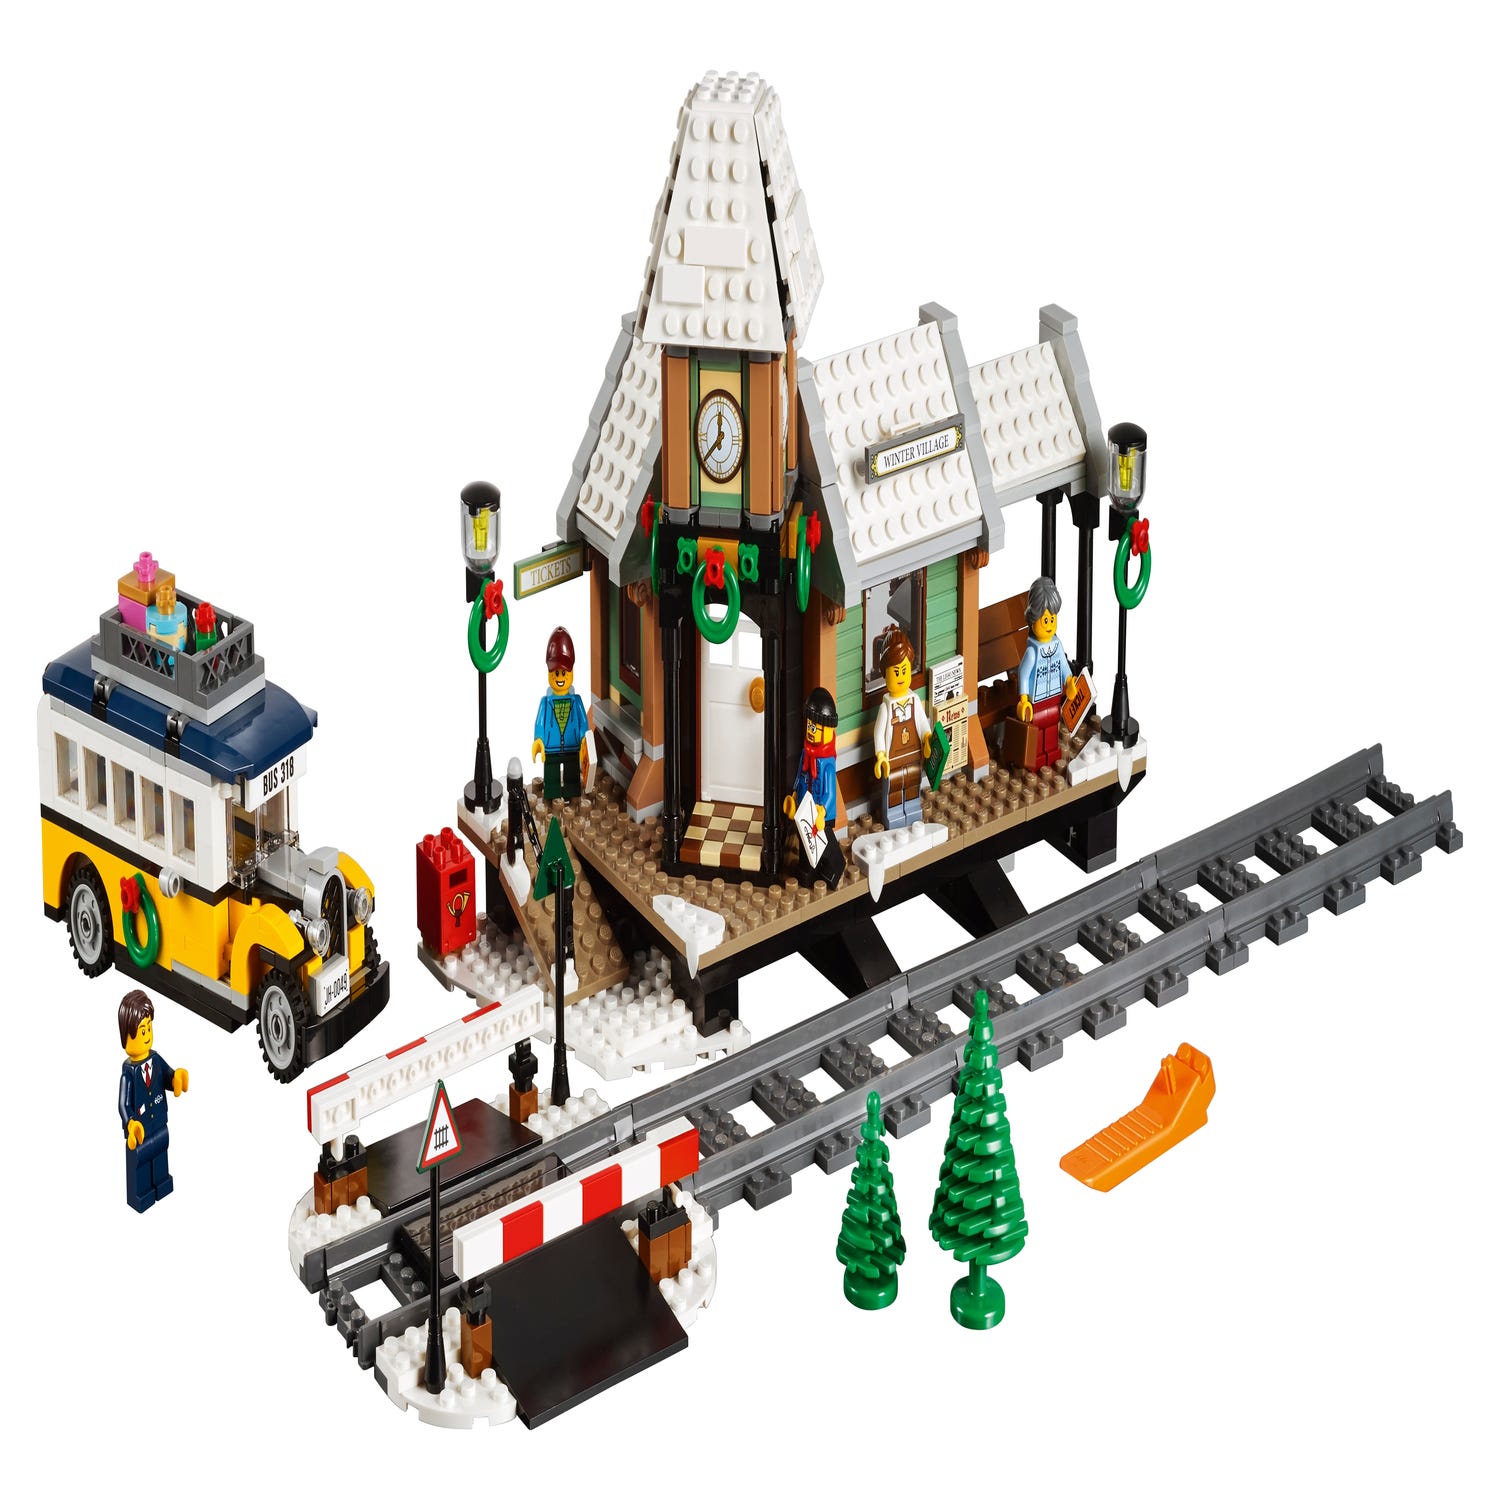 LEGO 10259 CREATOR EXPERT Winter Village Station SET ESCLUSIVO NATALE 2017